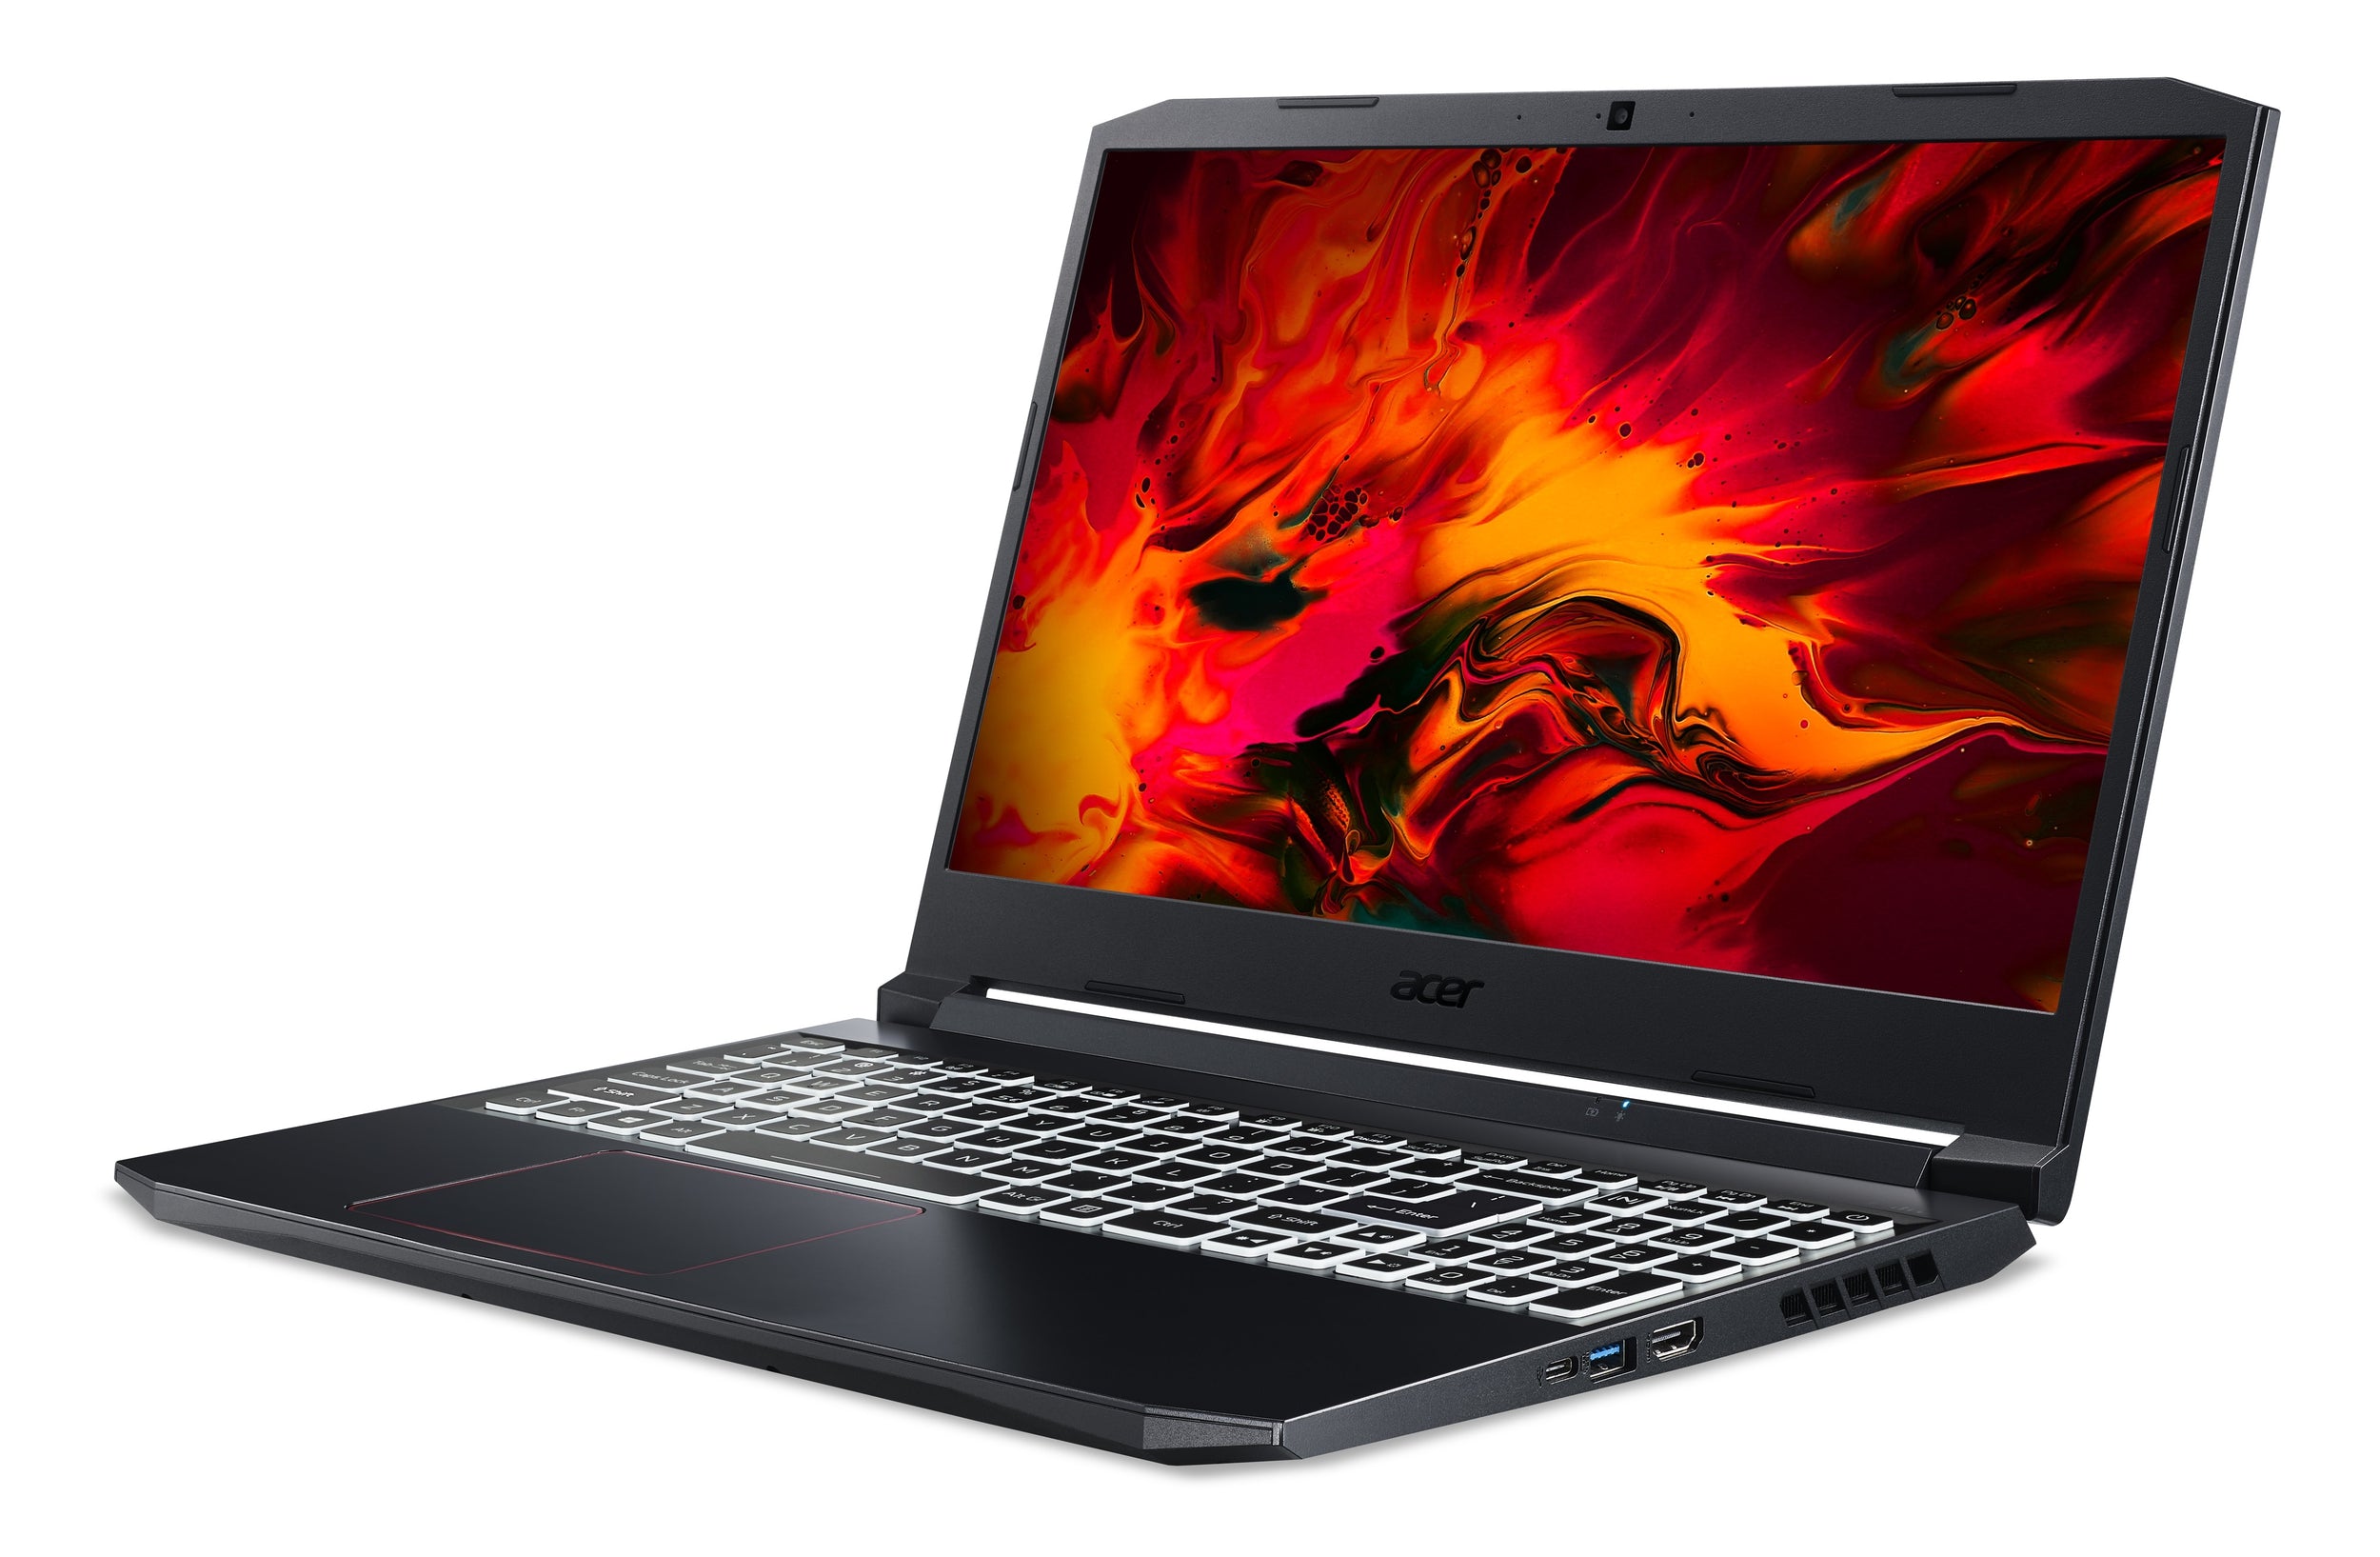 Computadora Portátil Gamer Acer An515-55-7581 Nitro Intel Core I7-10A Ram 8Gb Win10H 512Gbssd 15.6 Fullhd 144Hz Rtx3060 6Gb Gddr6 Teclado Retroiluminado Rojo Año Seguro